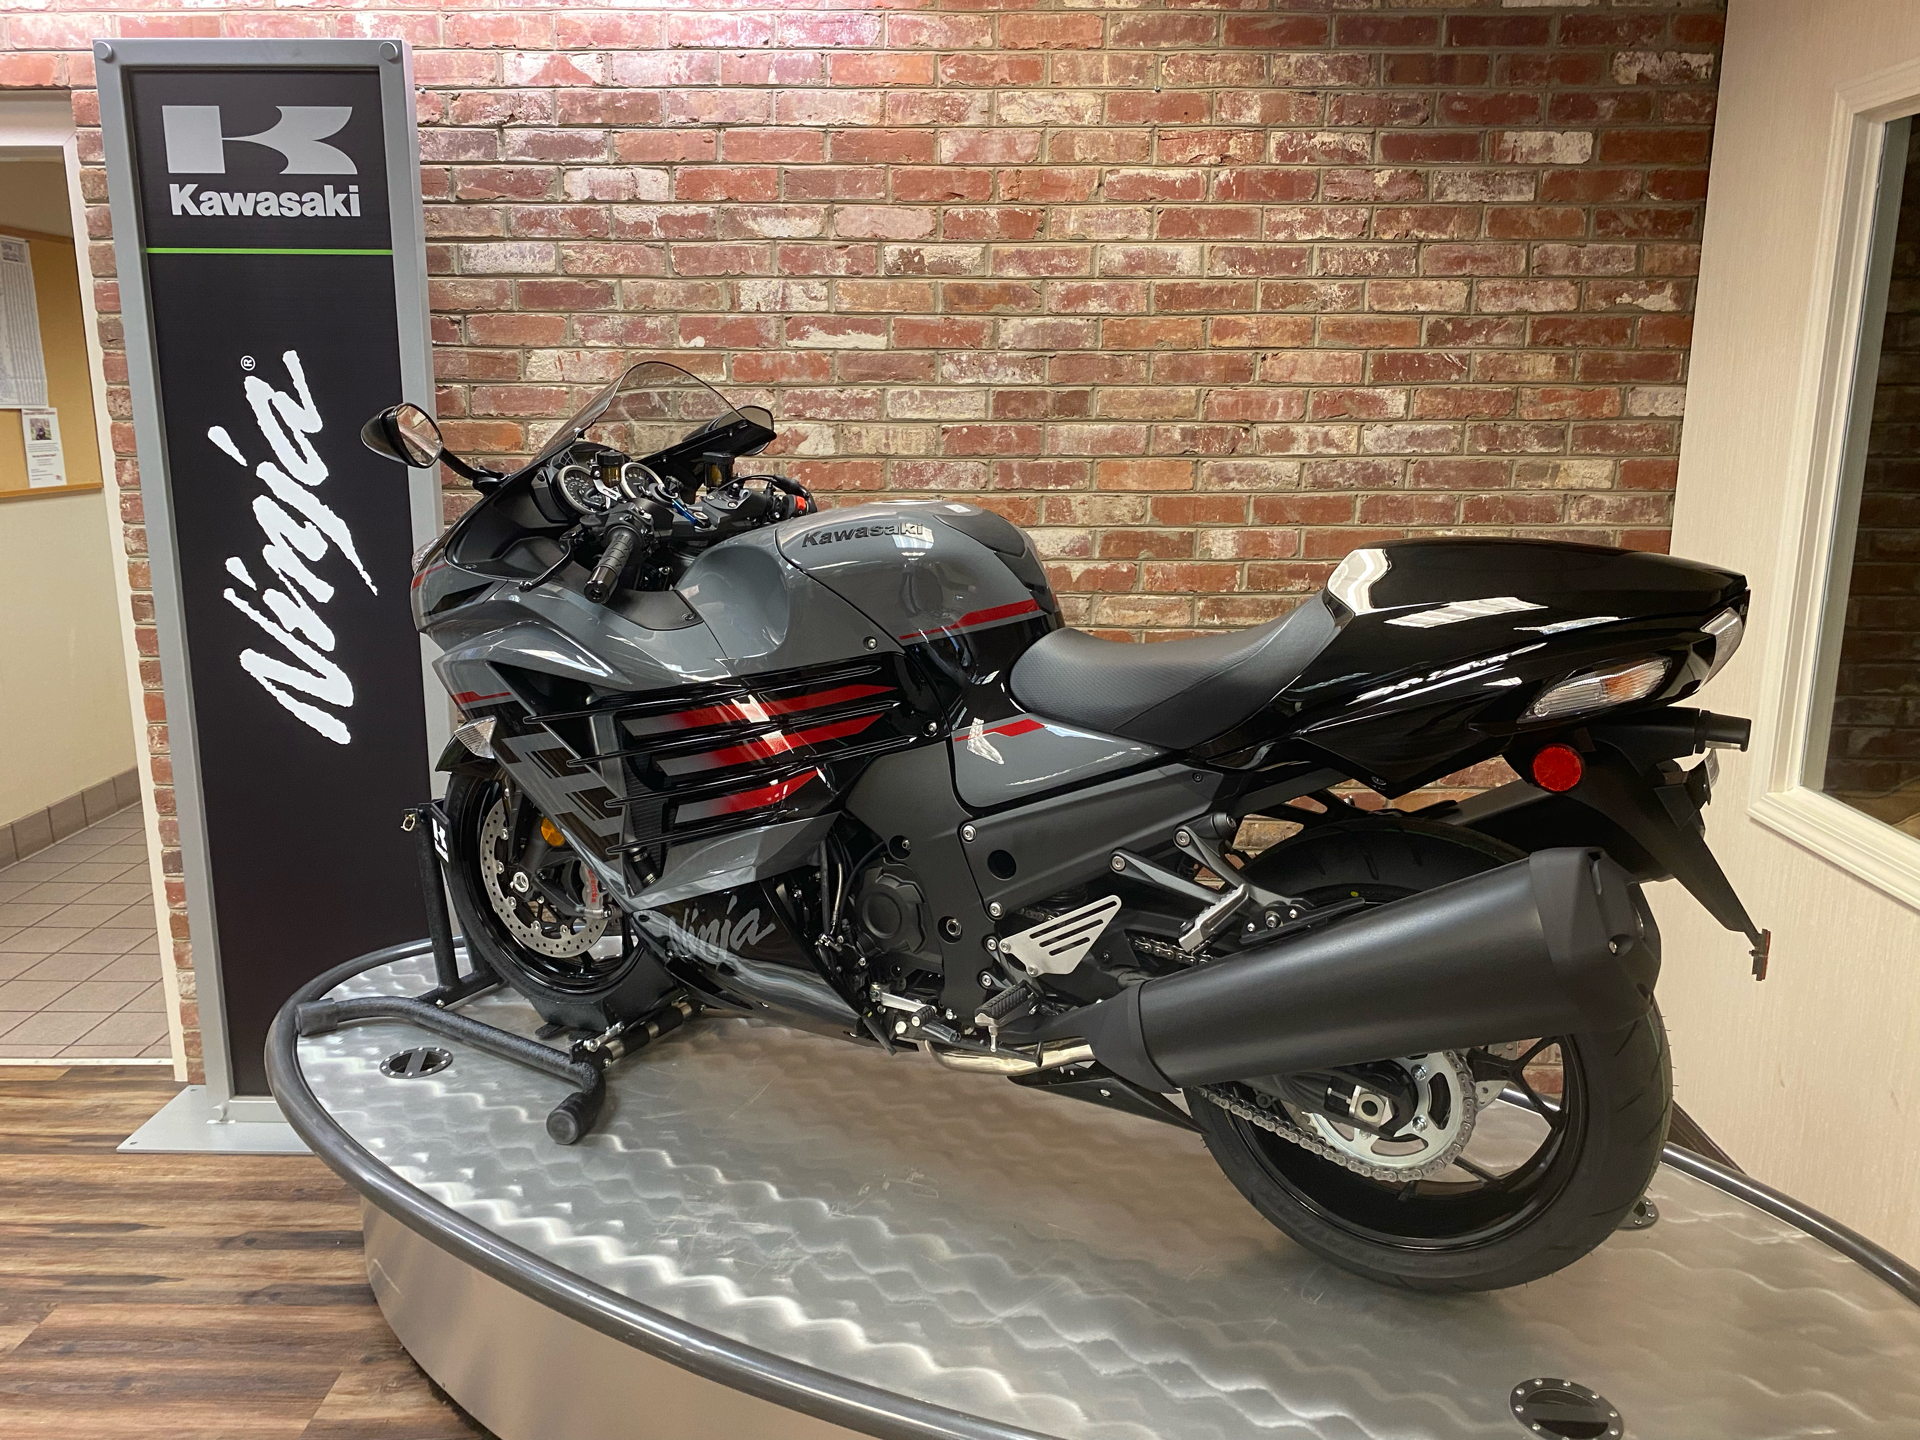 New 2022 Kawasaki Ninja ZX-14R ABS Motorcycles in Statesville, NC | Stock  Number: 015436 